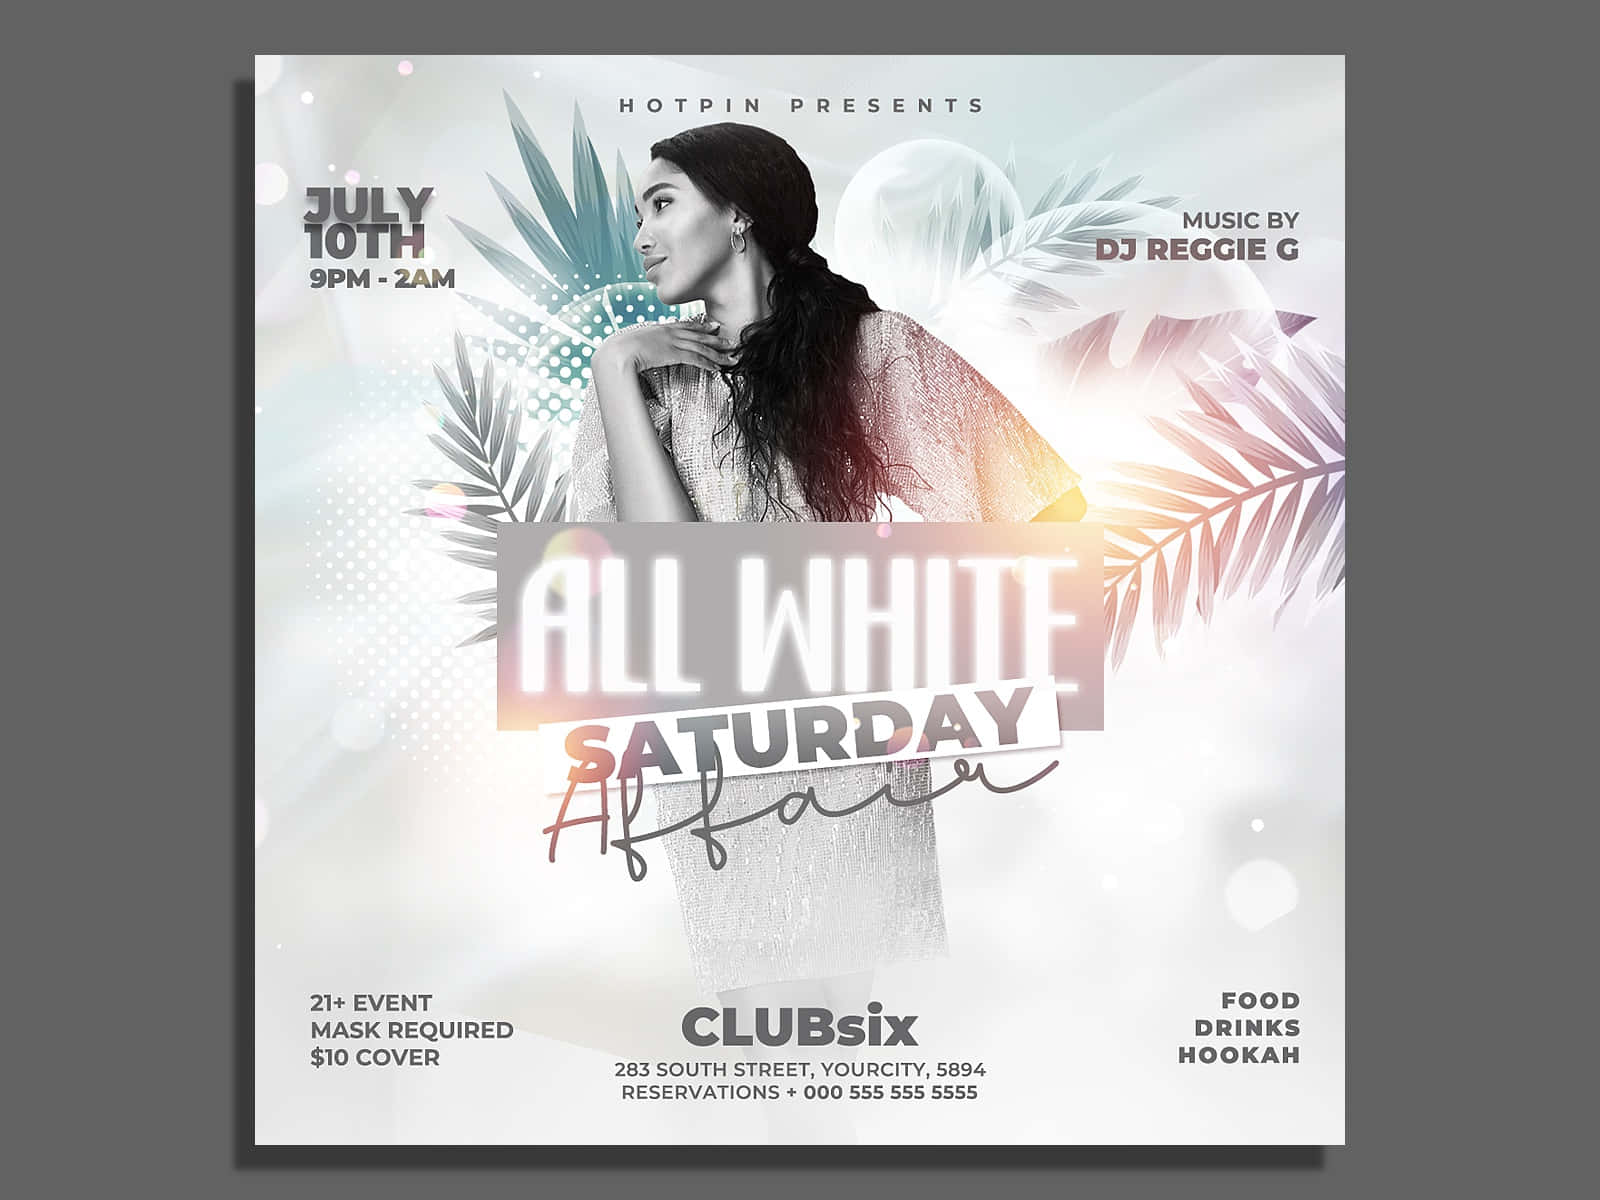 Allwhite Saturday Affair Party Flyer Bakgrundsbild